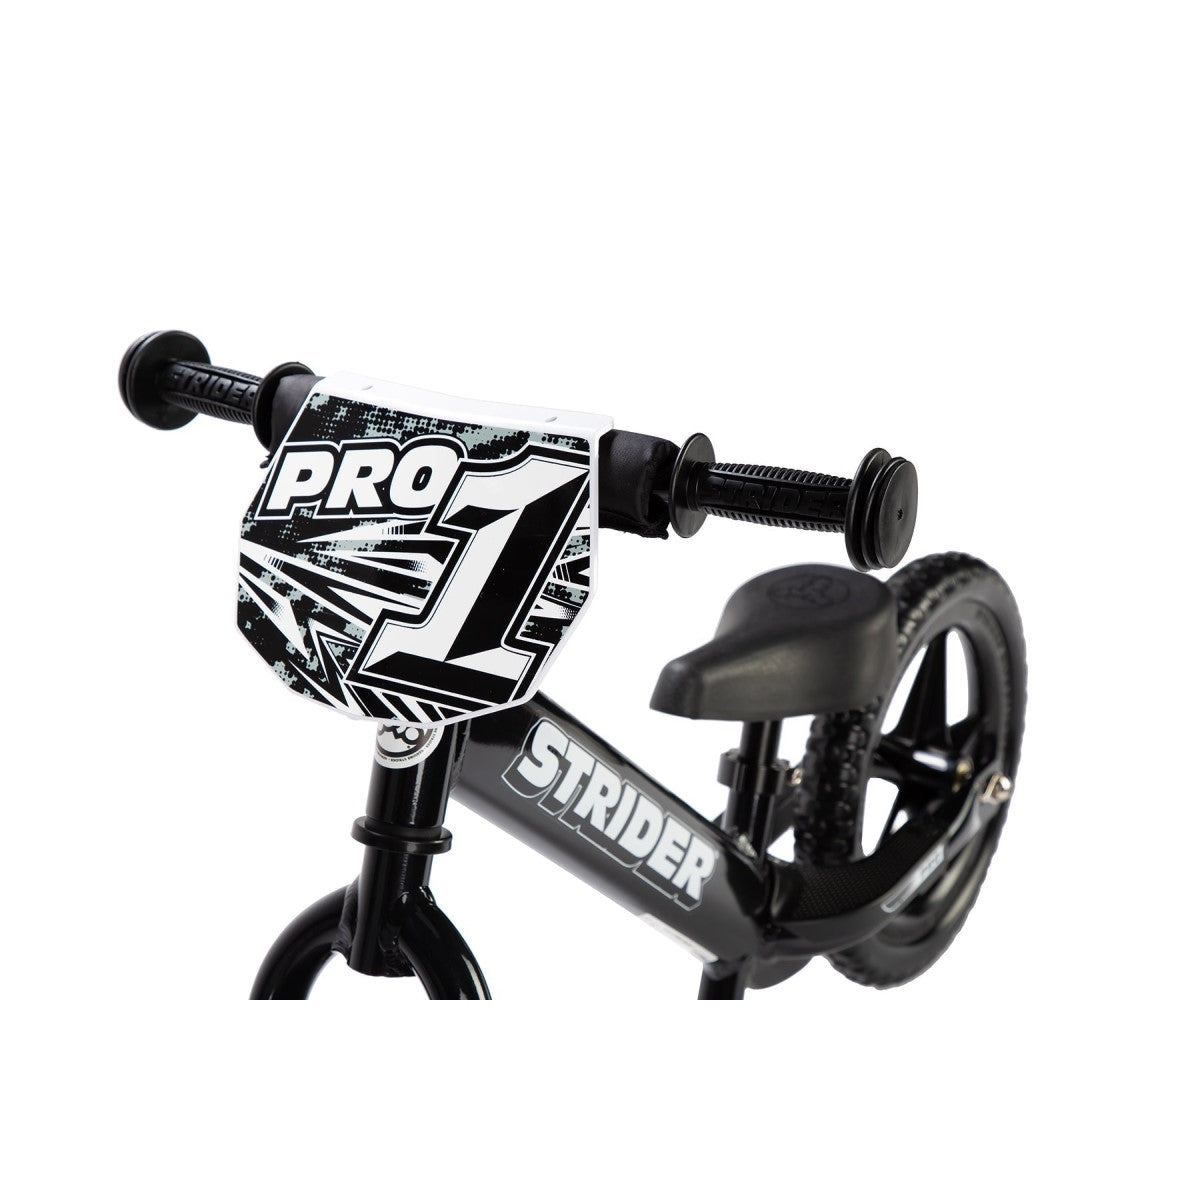 Strider 12 Pro Balance Bike